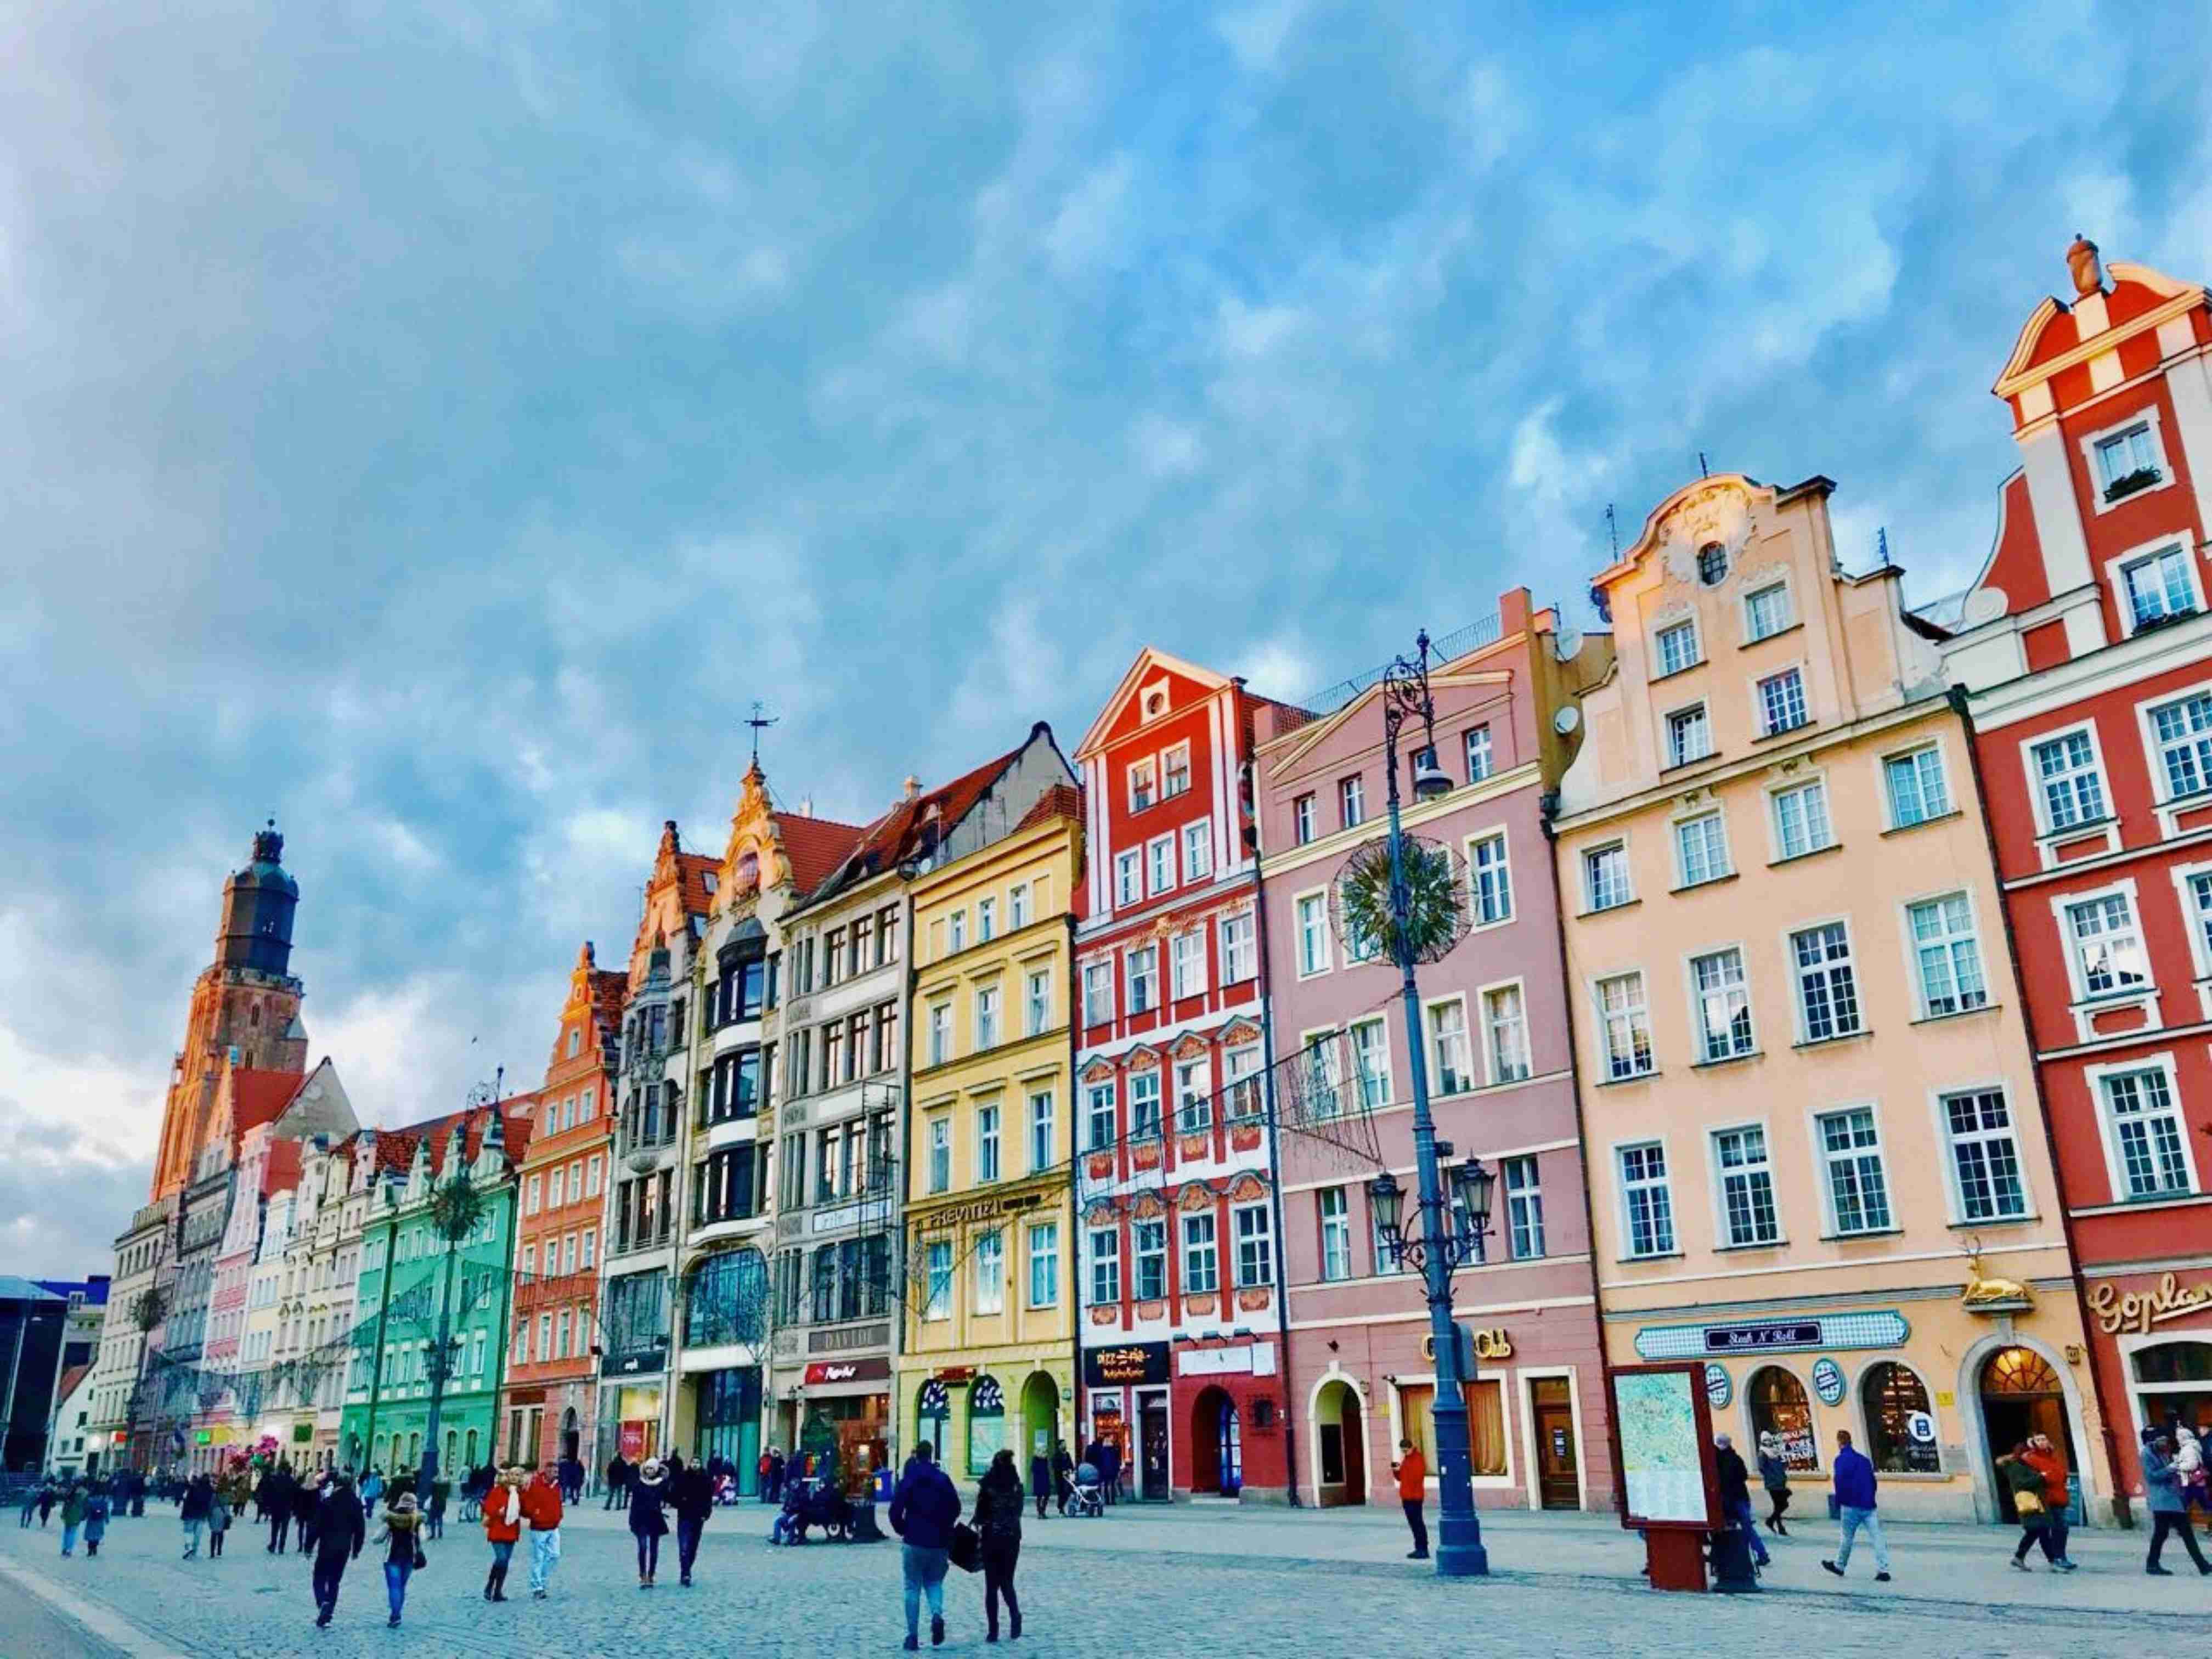 Wroclaw photo